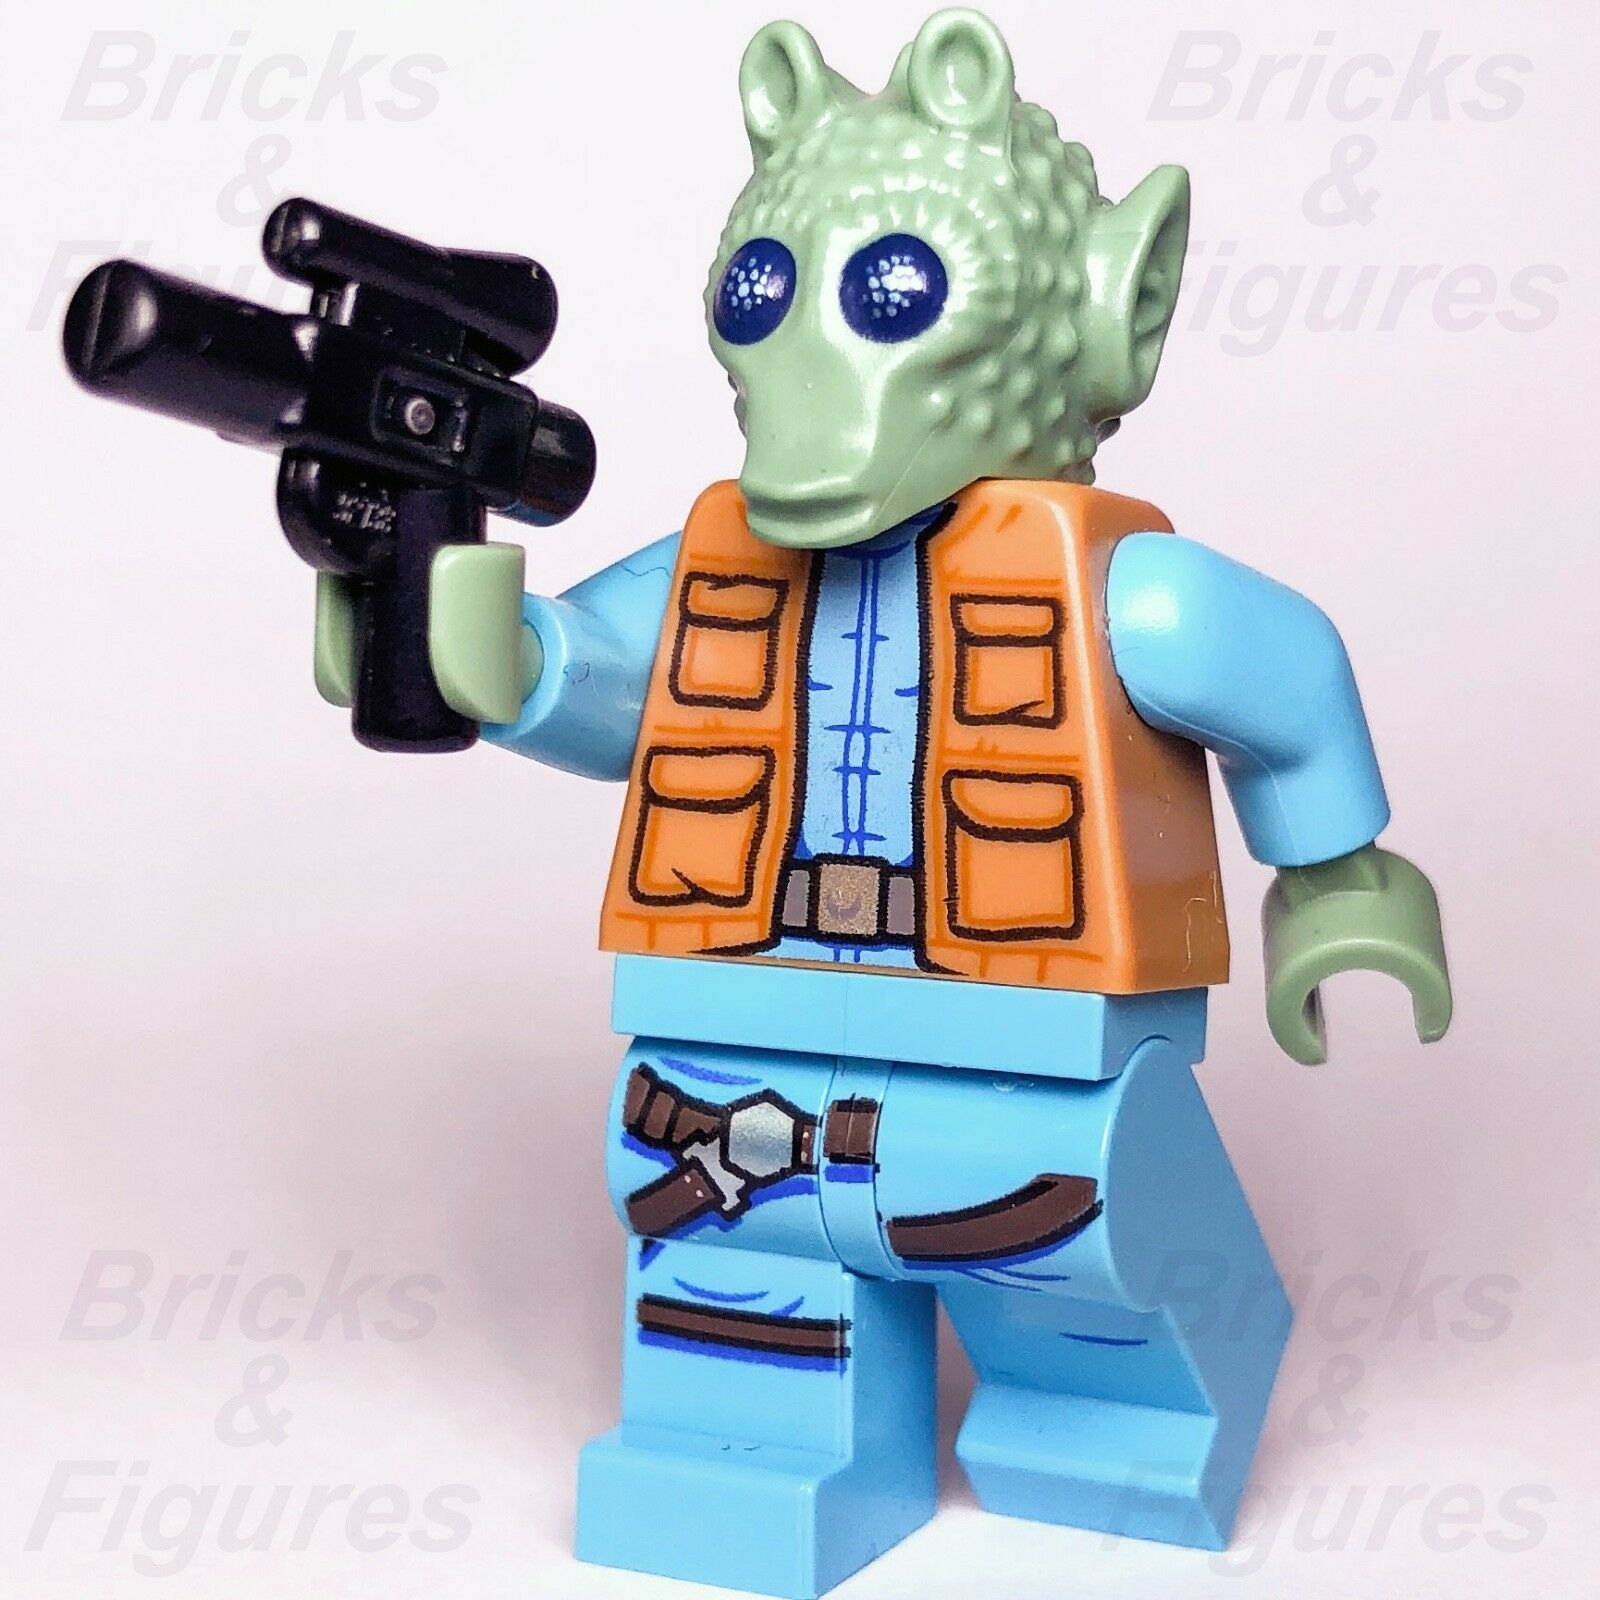 New Star Wars LEGO Greedo Rodian Bounty Hunter Tatooine Minifigure 75205 - Bricks & Figures